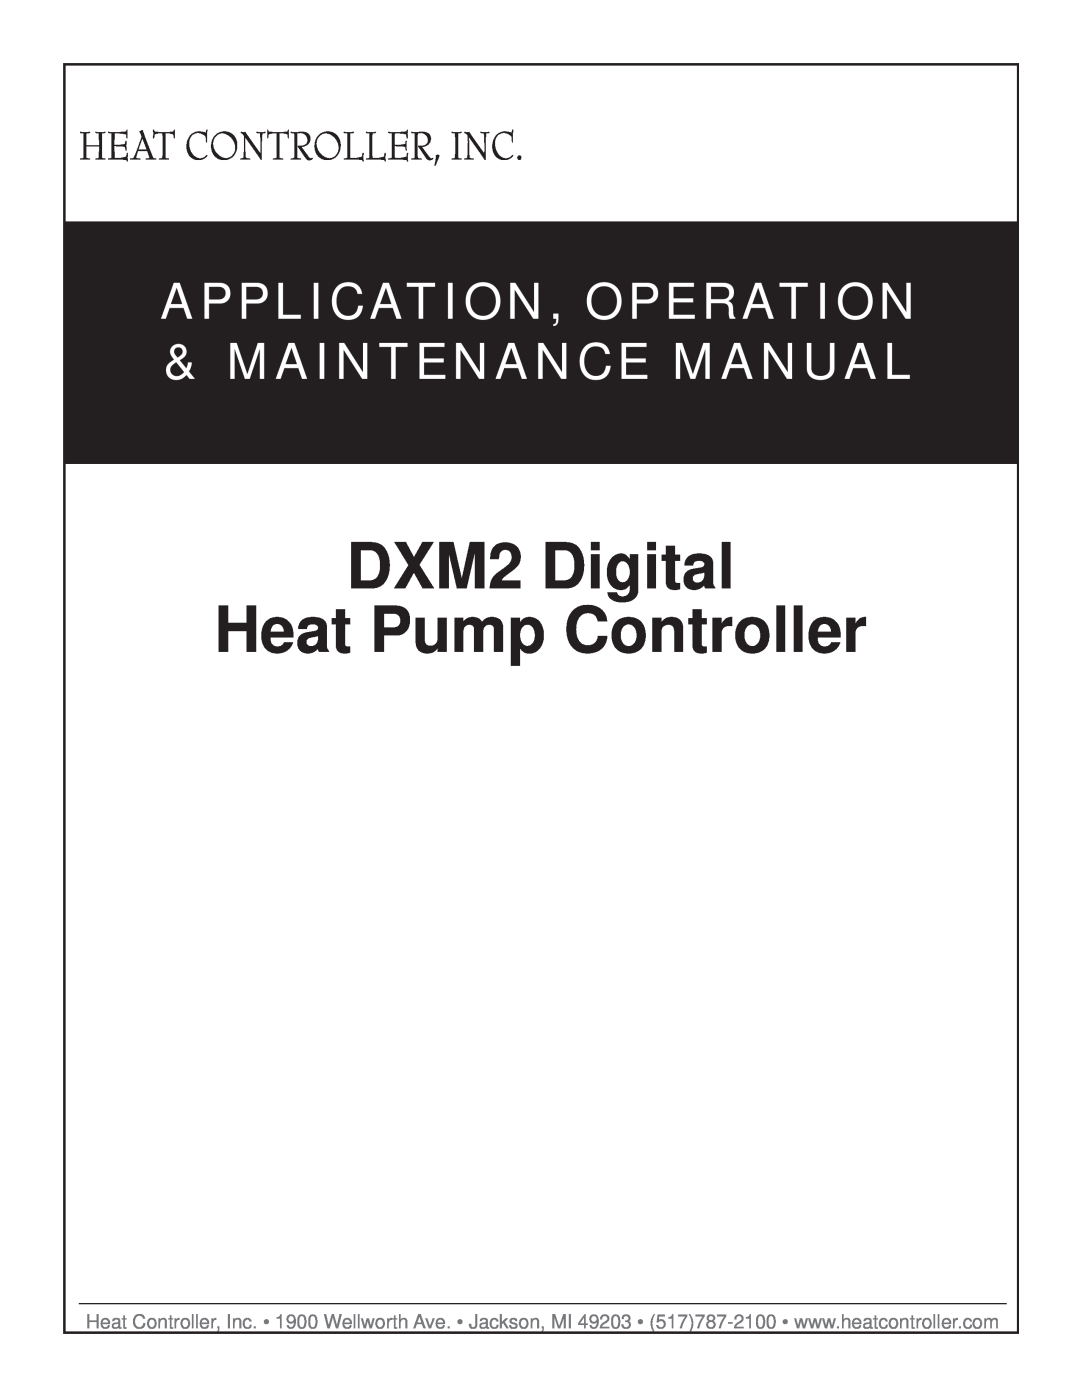 Heat Controller manual DXM2 Digital Heat Pump Controller, Application, Operation & Maintenance Manual 